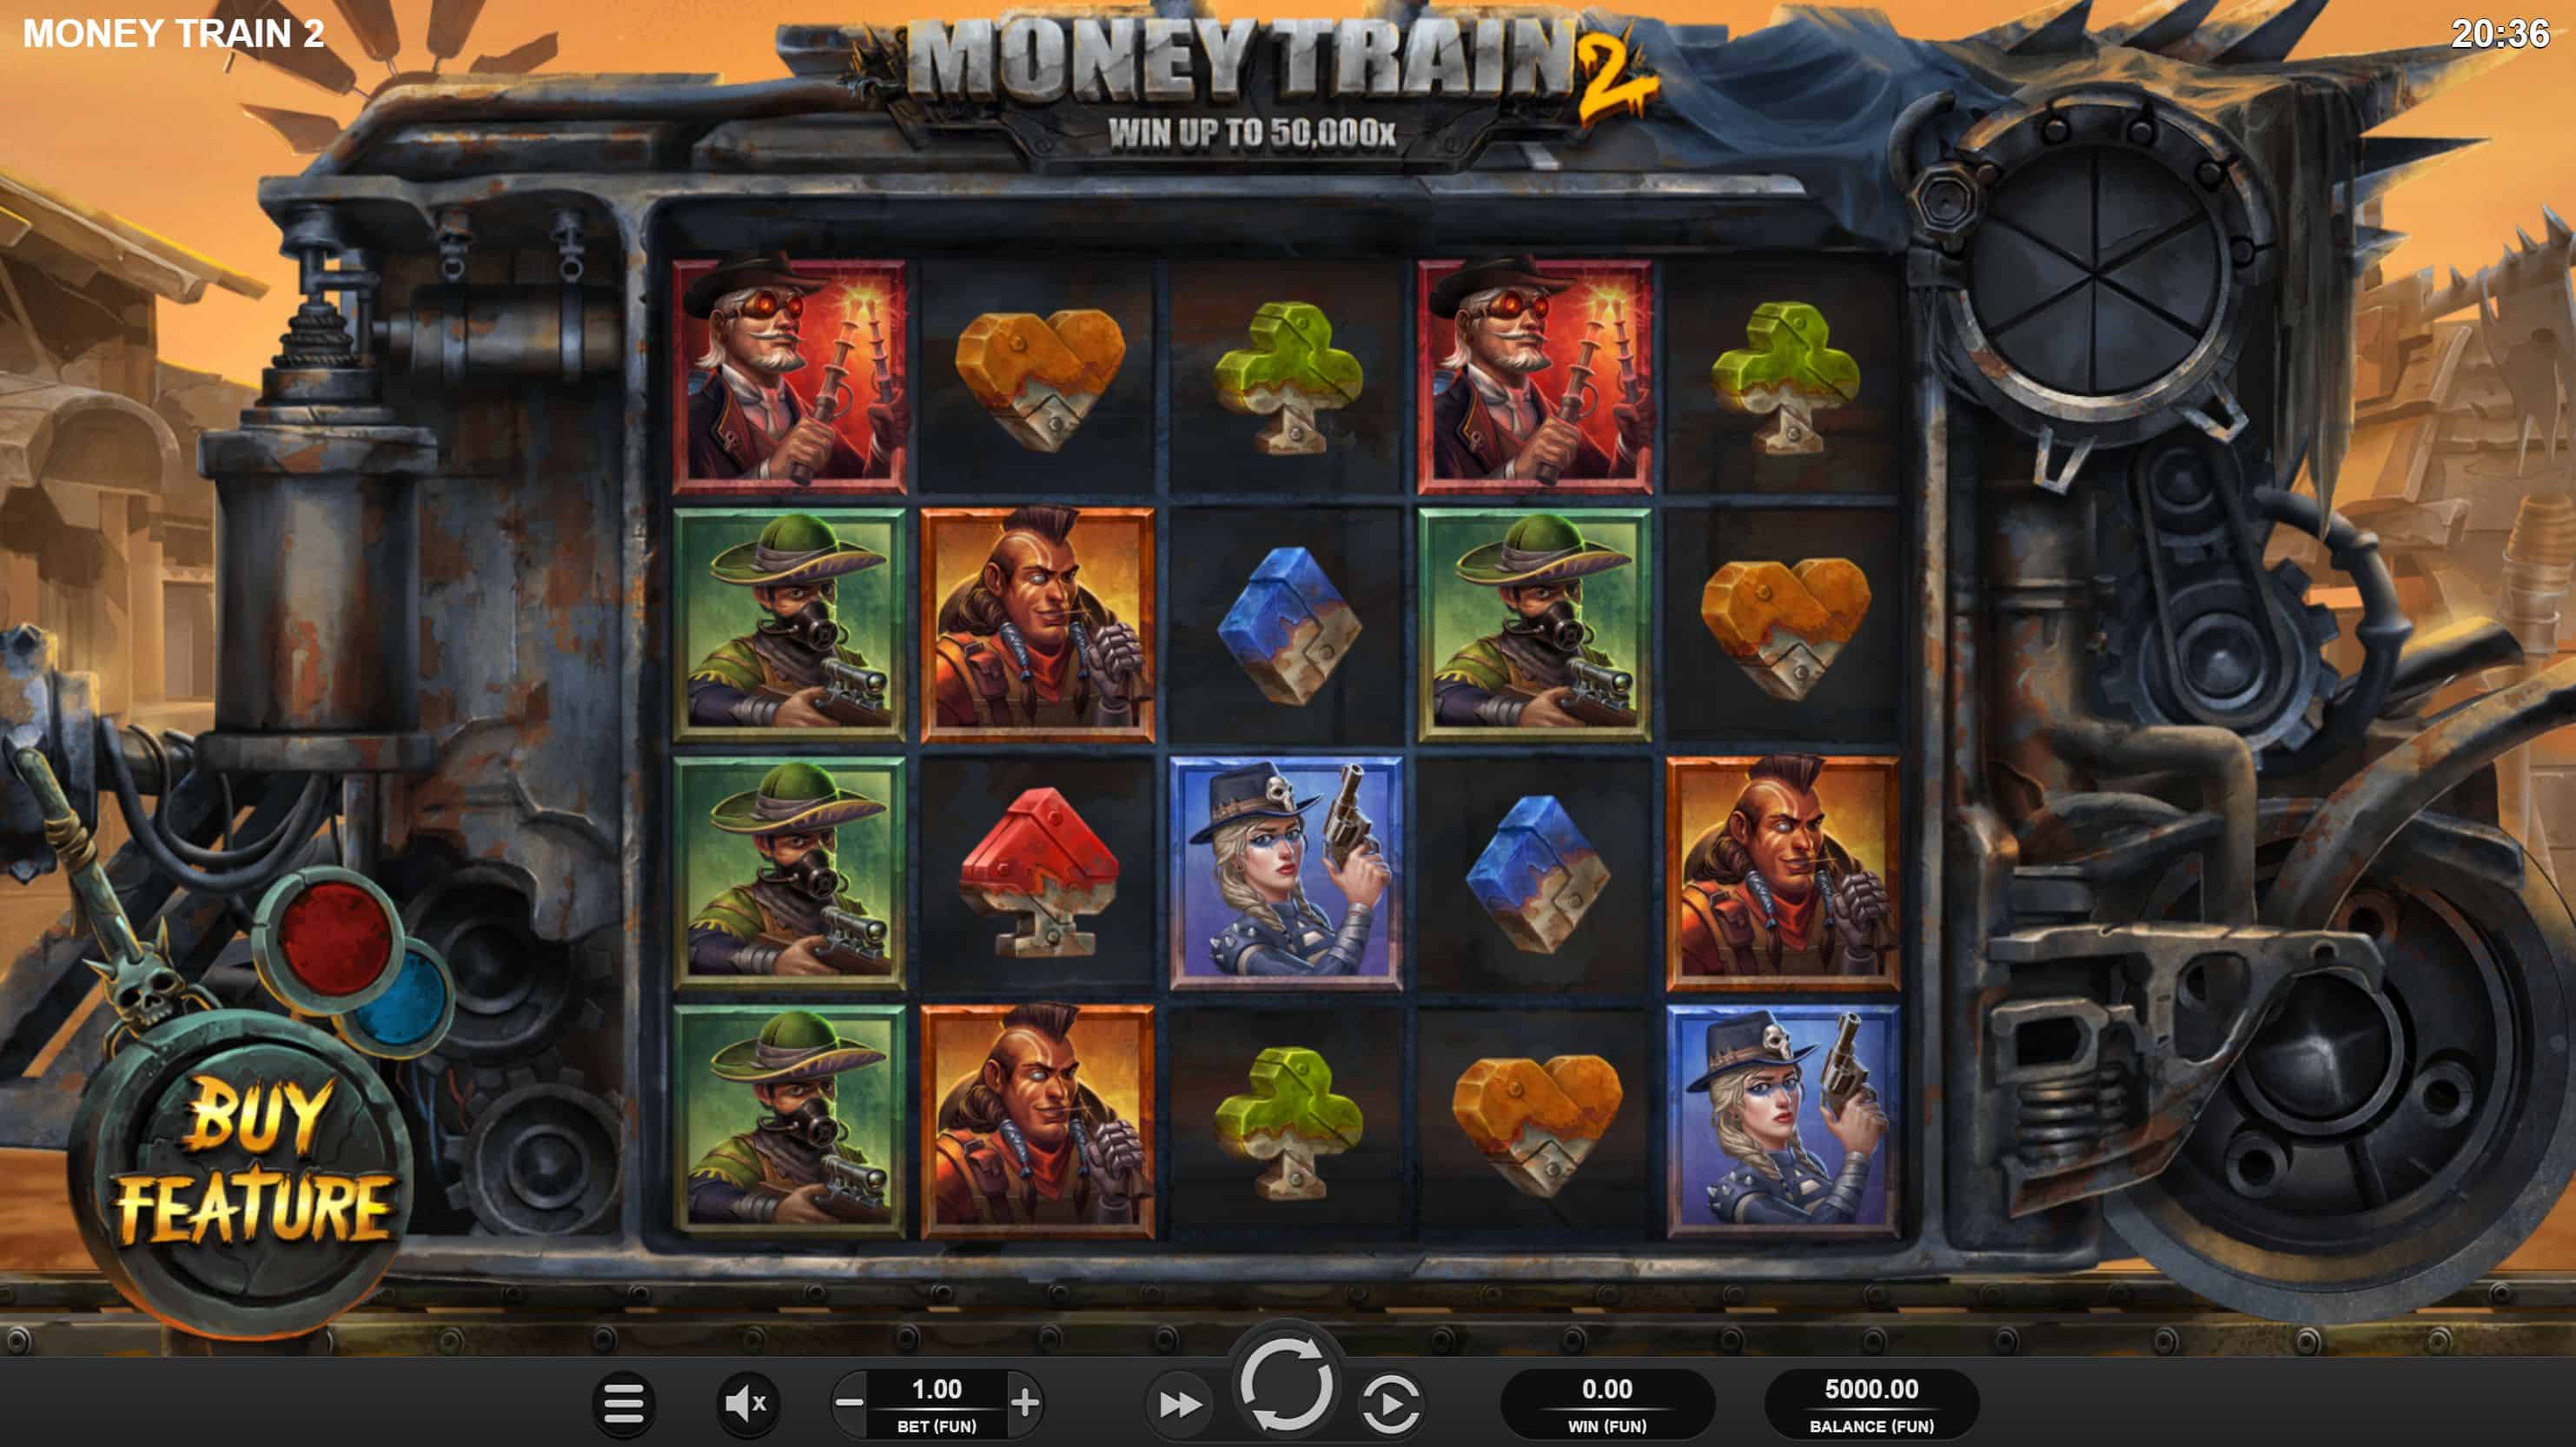 Money Train 2 Slot Game Free Play at Casino Ireland 01